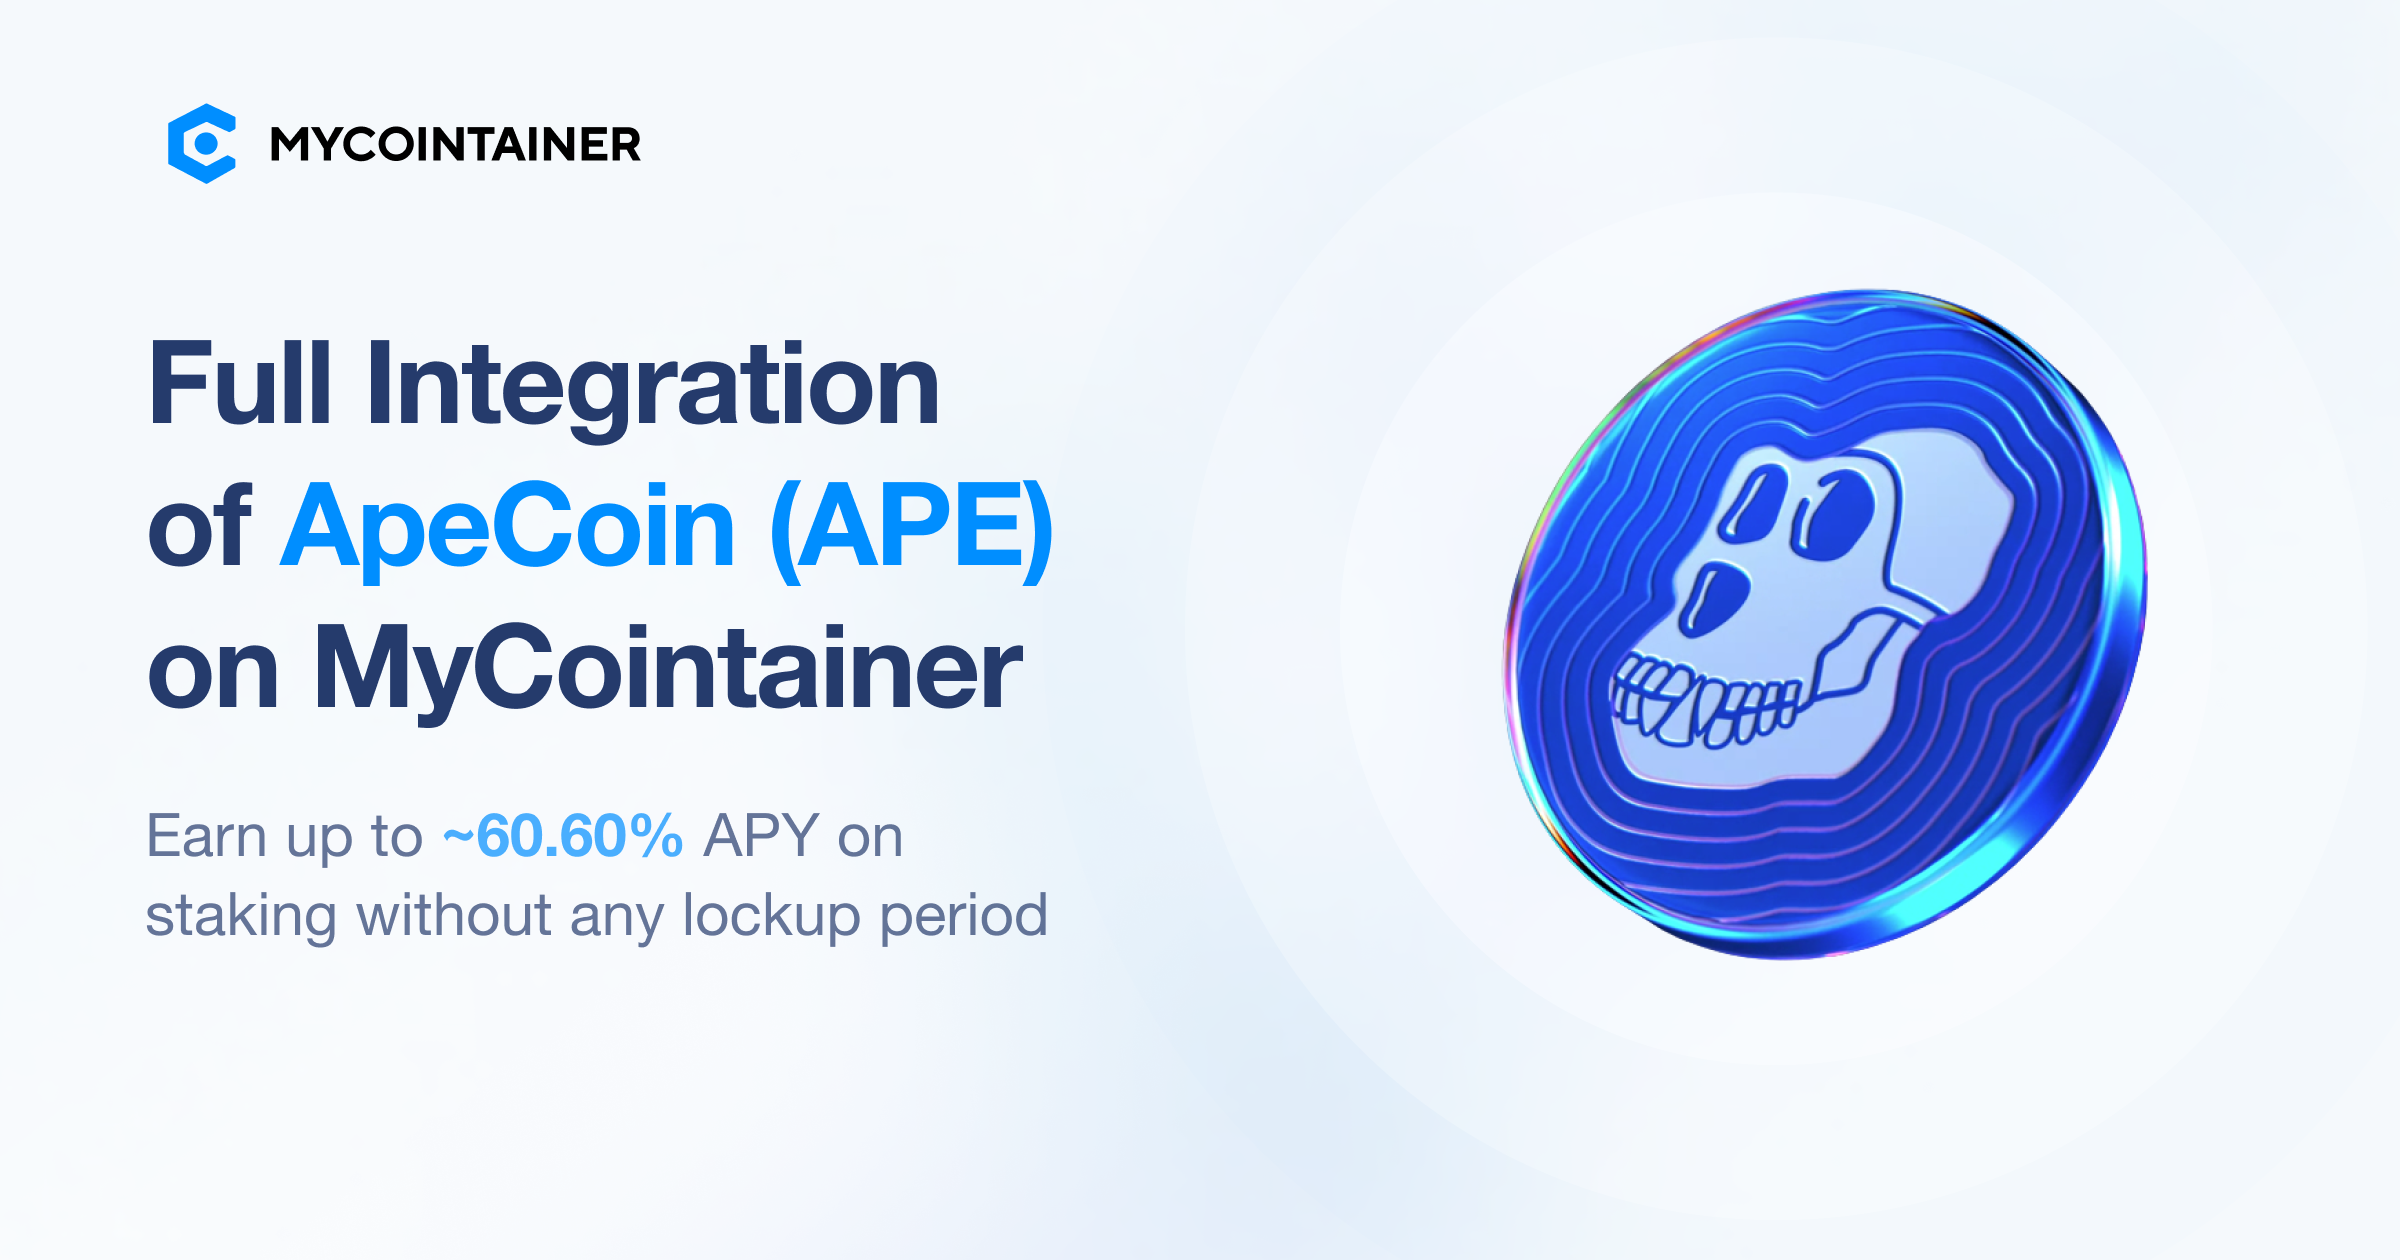 MyCointainer's Recap of ApeCoin (APE) Full Integration